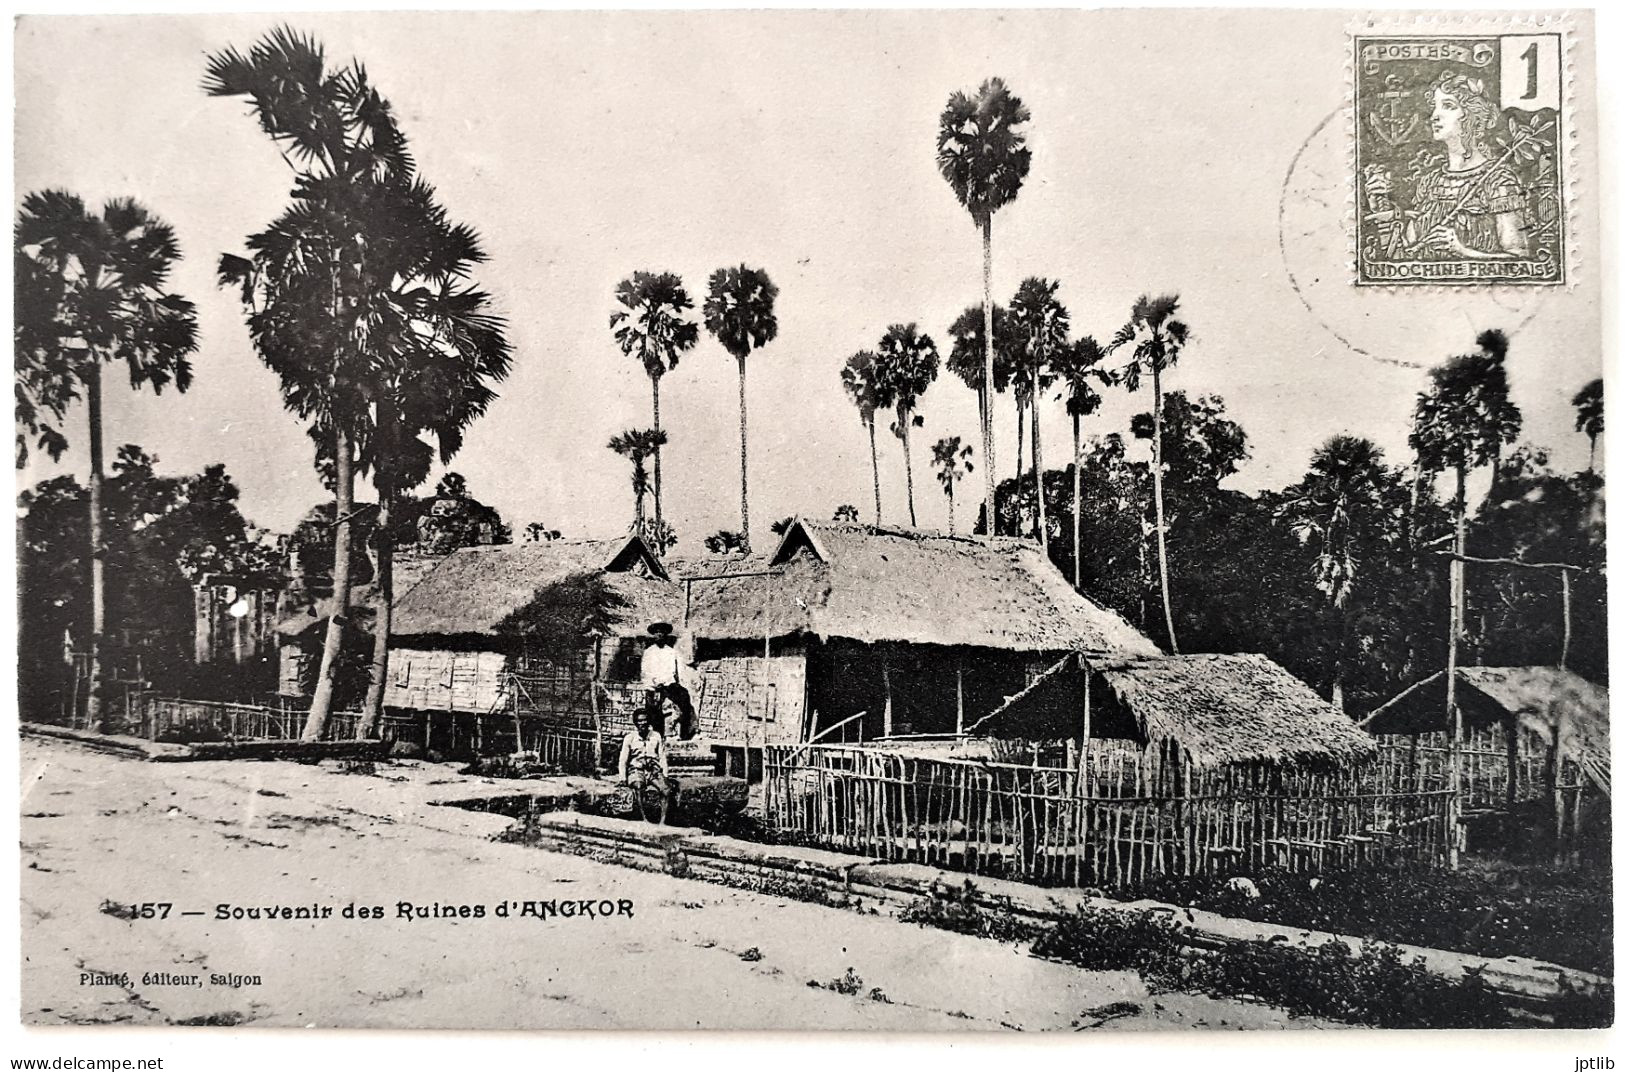 CPA Carte Postale / Indo-Chine, Indochine, Cambodge / Planté, éditeur - 157 / Souvenir Des Ruines D'Angkor. - Cambodge